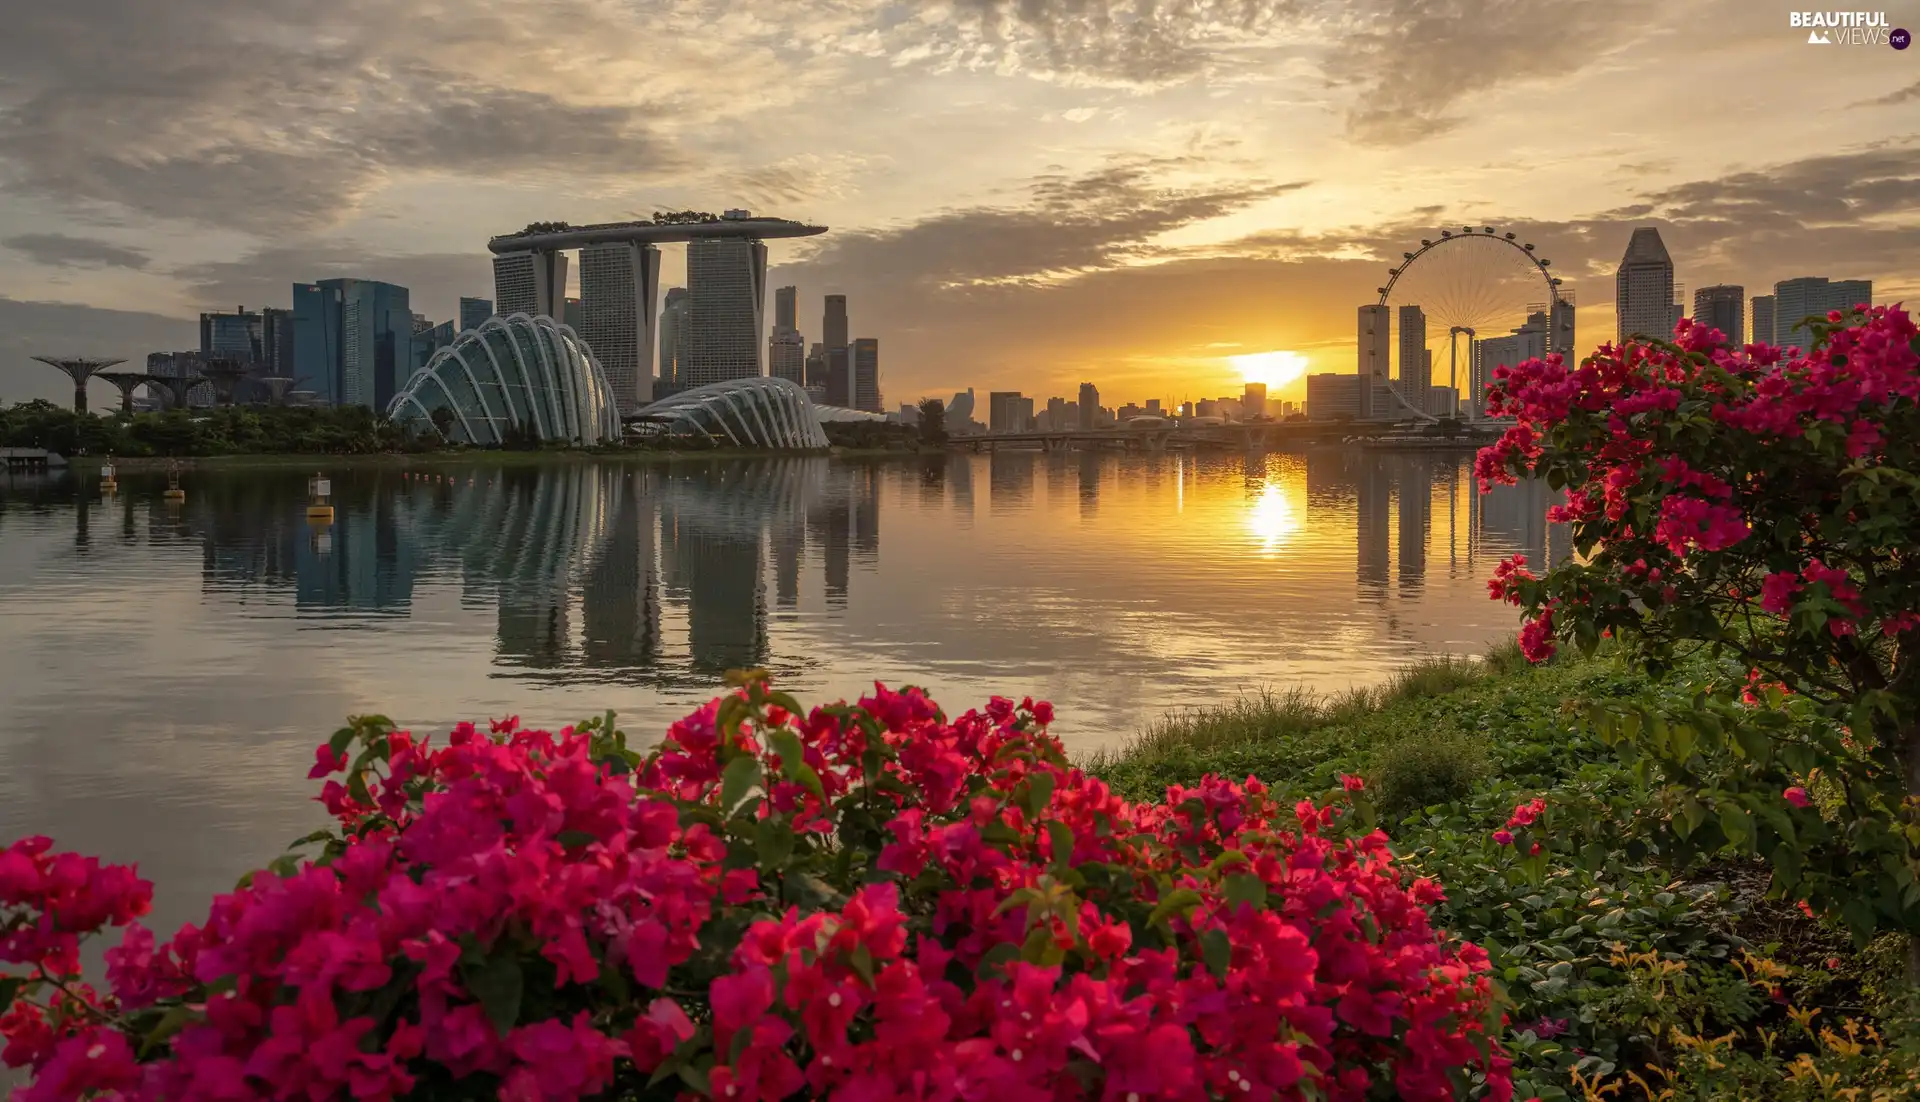 skyscrapers, Singapur, Great Sunsets, bridge, Flowers, Hotel Marina Bay Sands, Marina Bay, River